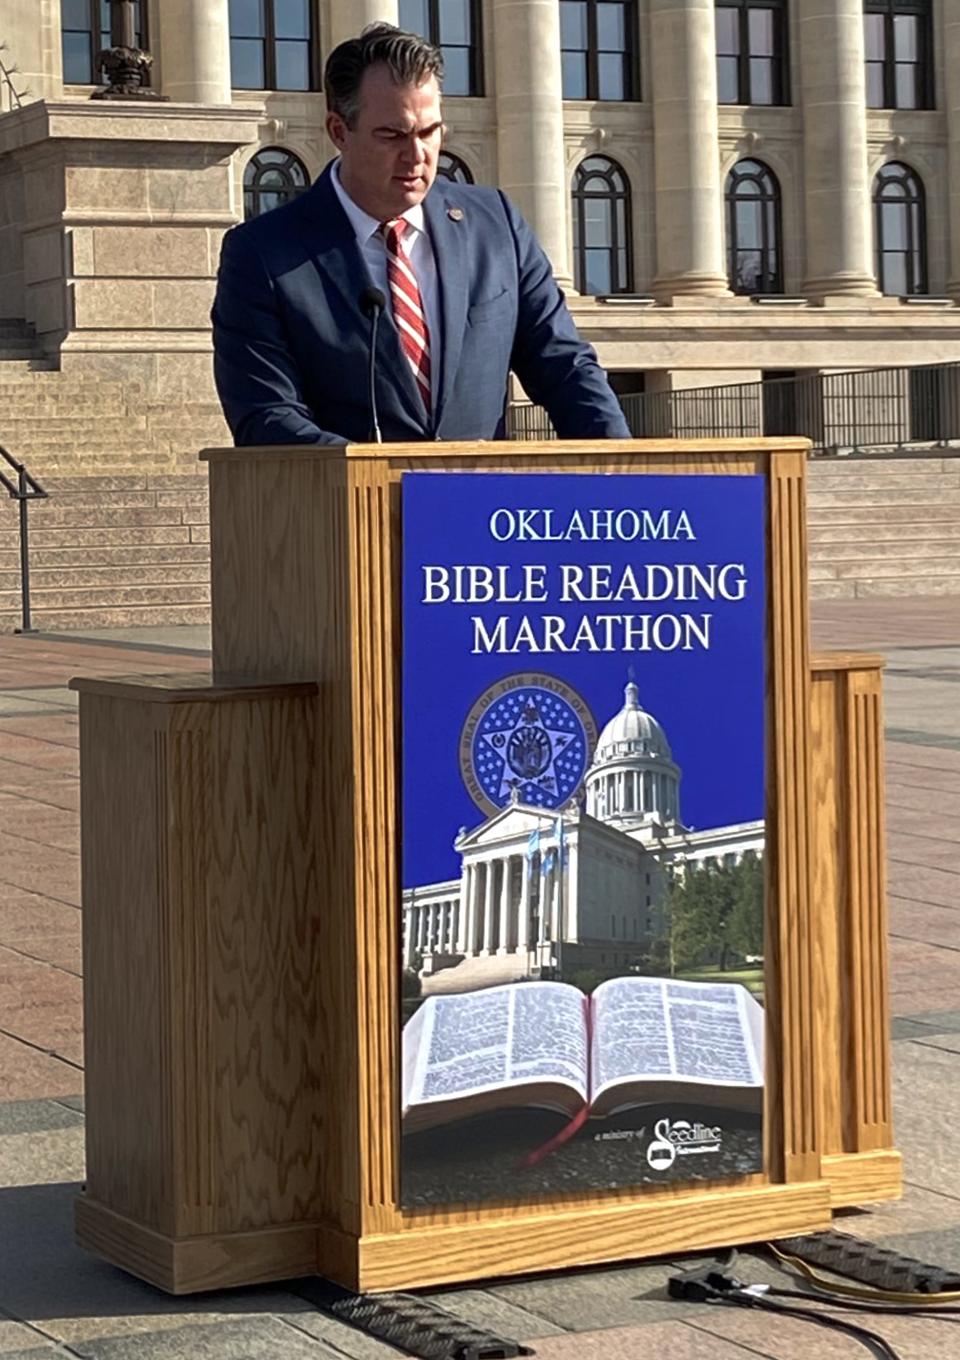 Gov. Kevin Stitt participates Wednesday in the Oklahoma Bible Reading Marathon at the Capitol in Oklahoma City.